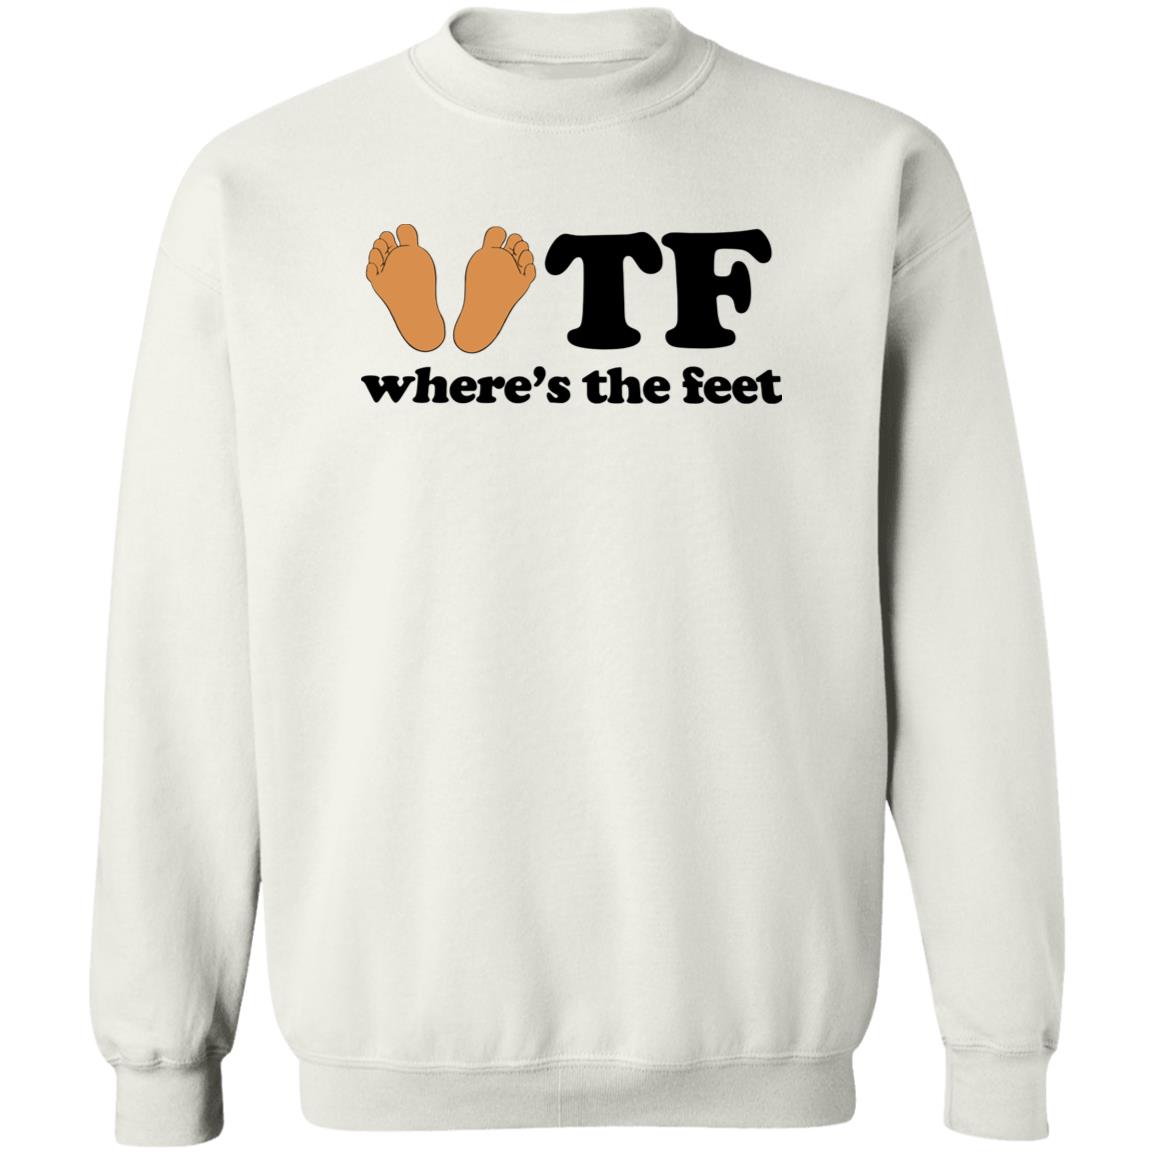 Wtf Where’s The Feet Shirt 2